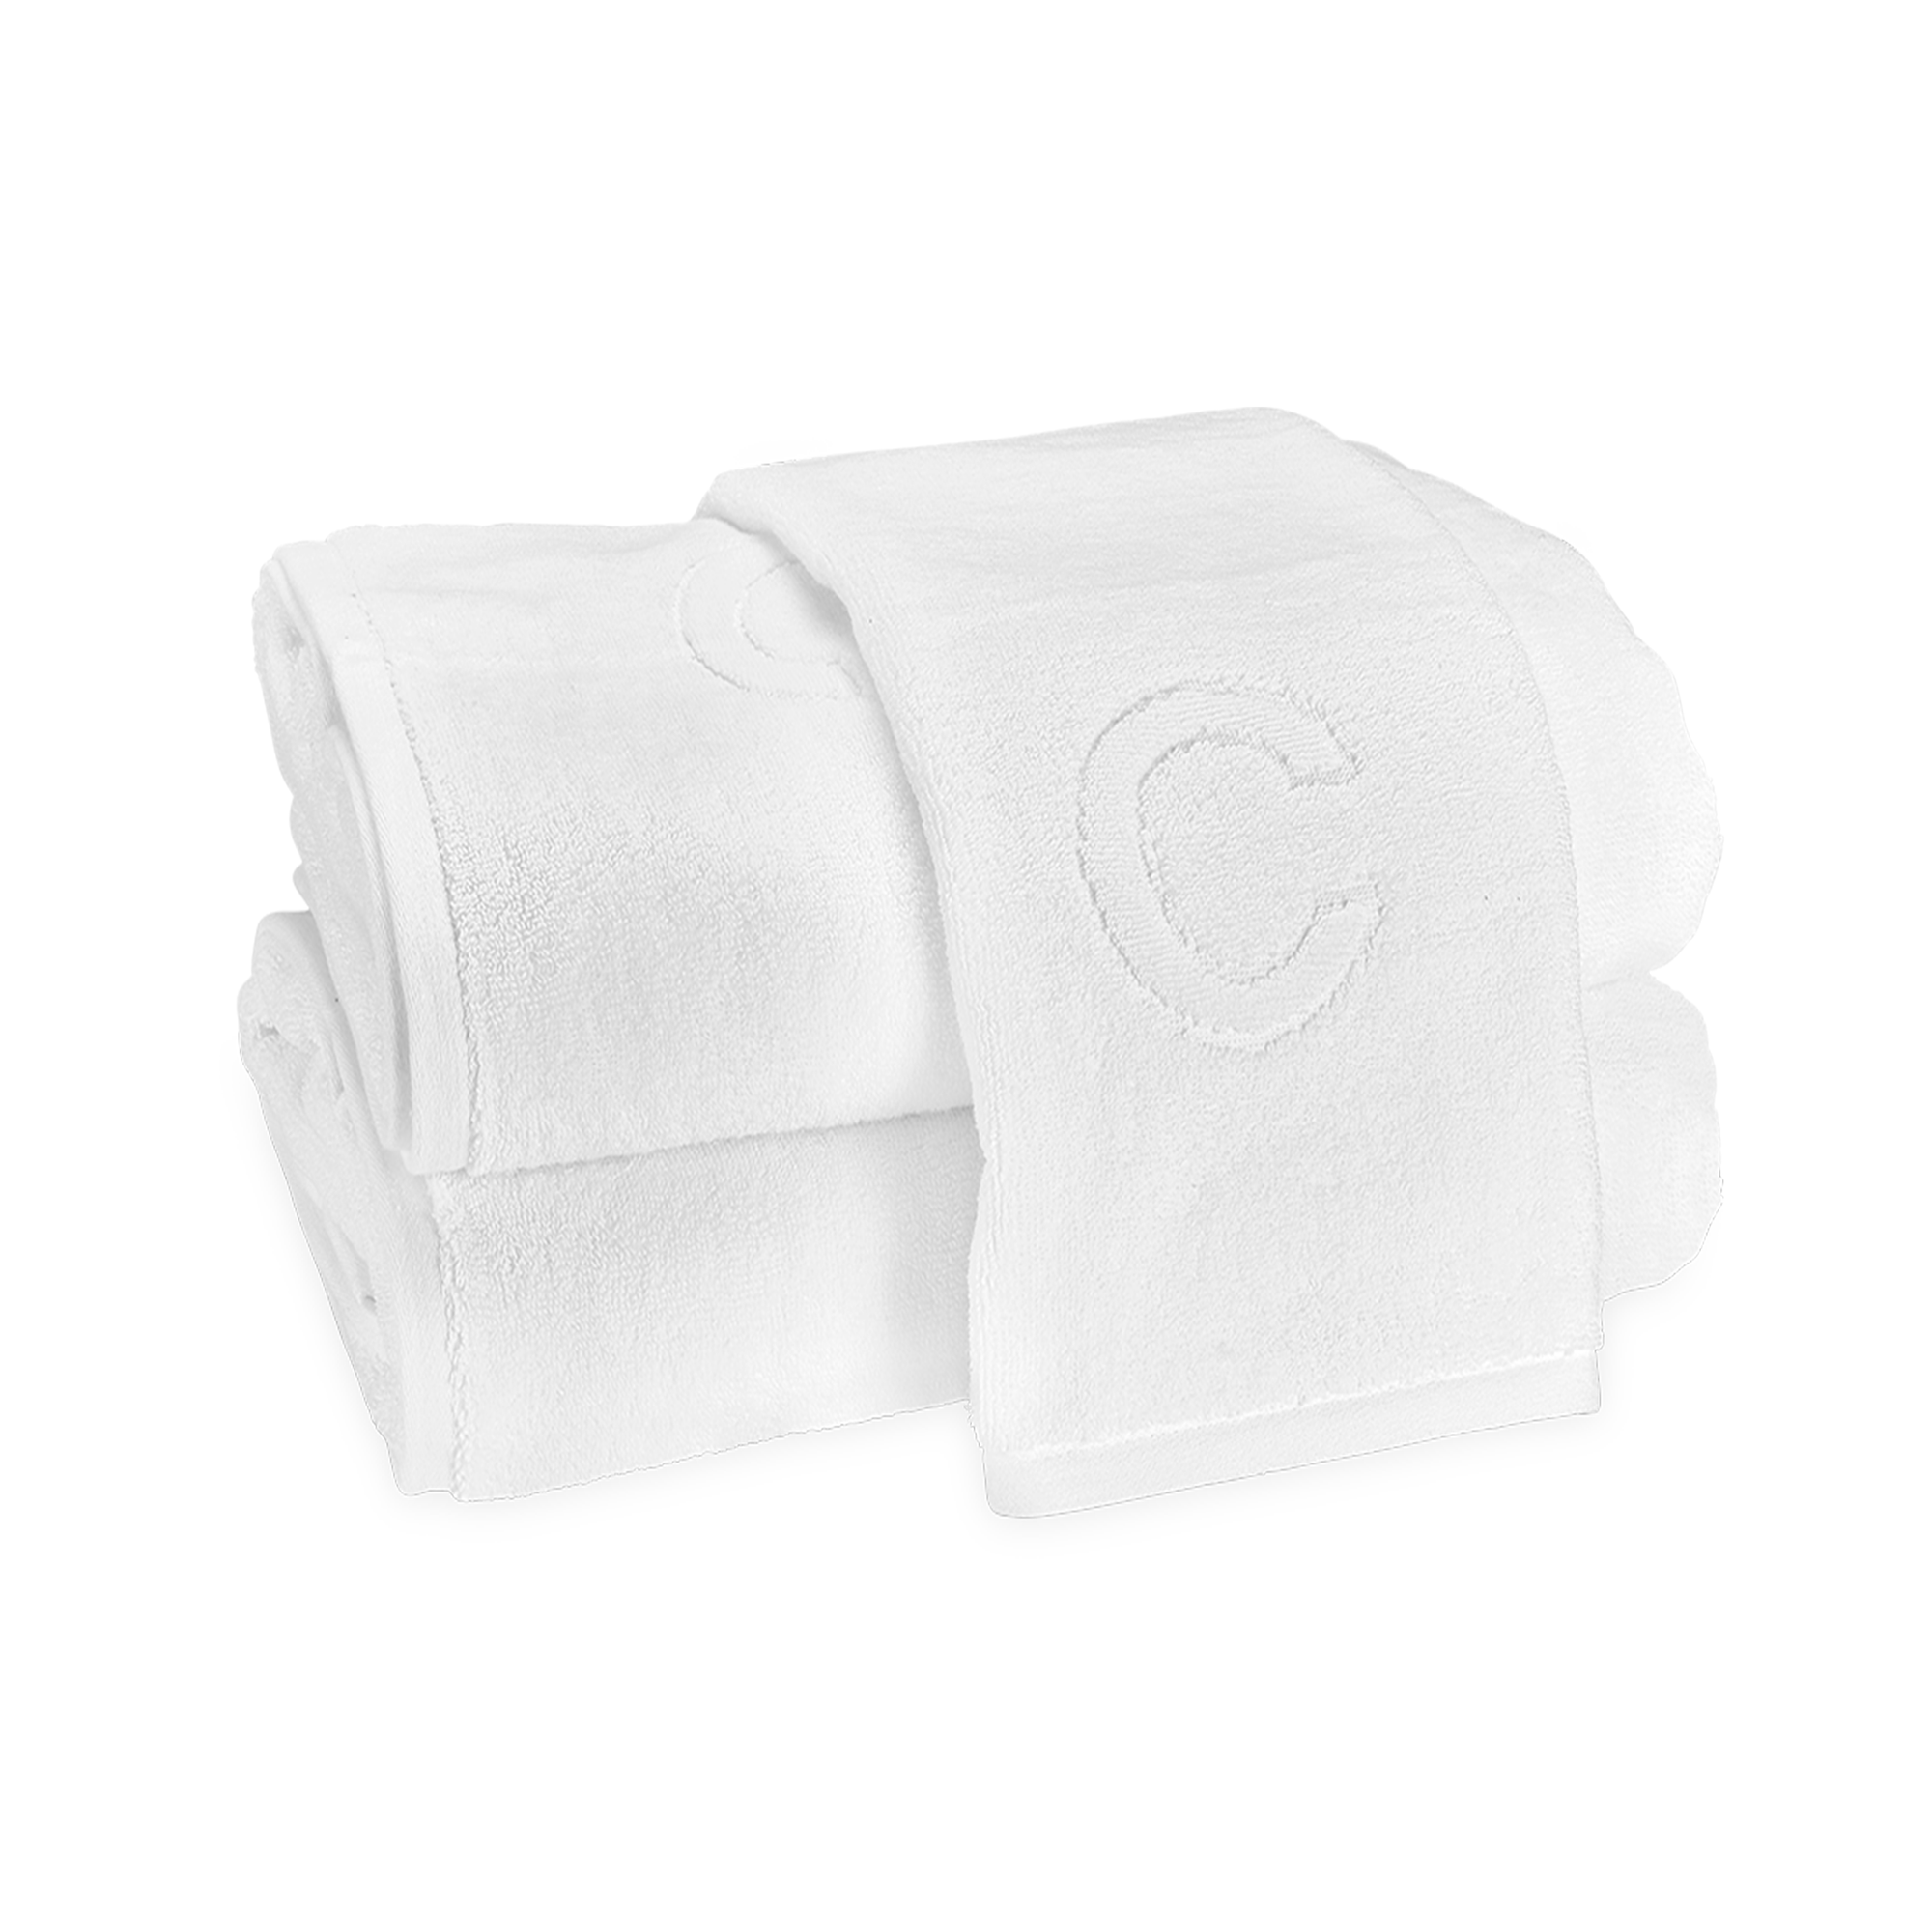 Swatch Sample of Letter C Matouk Auberge Bath Towels